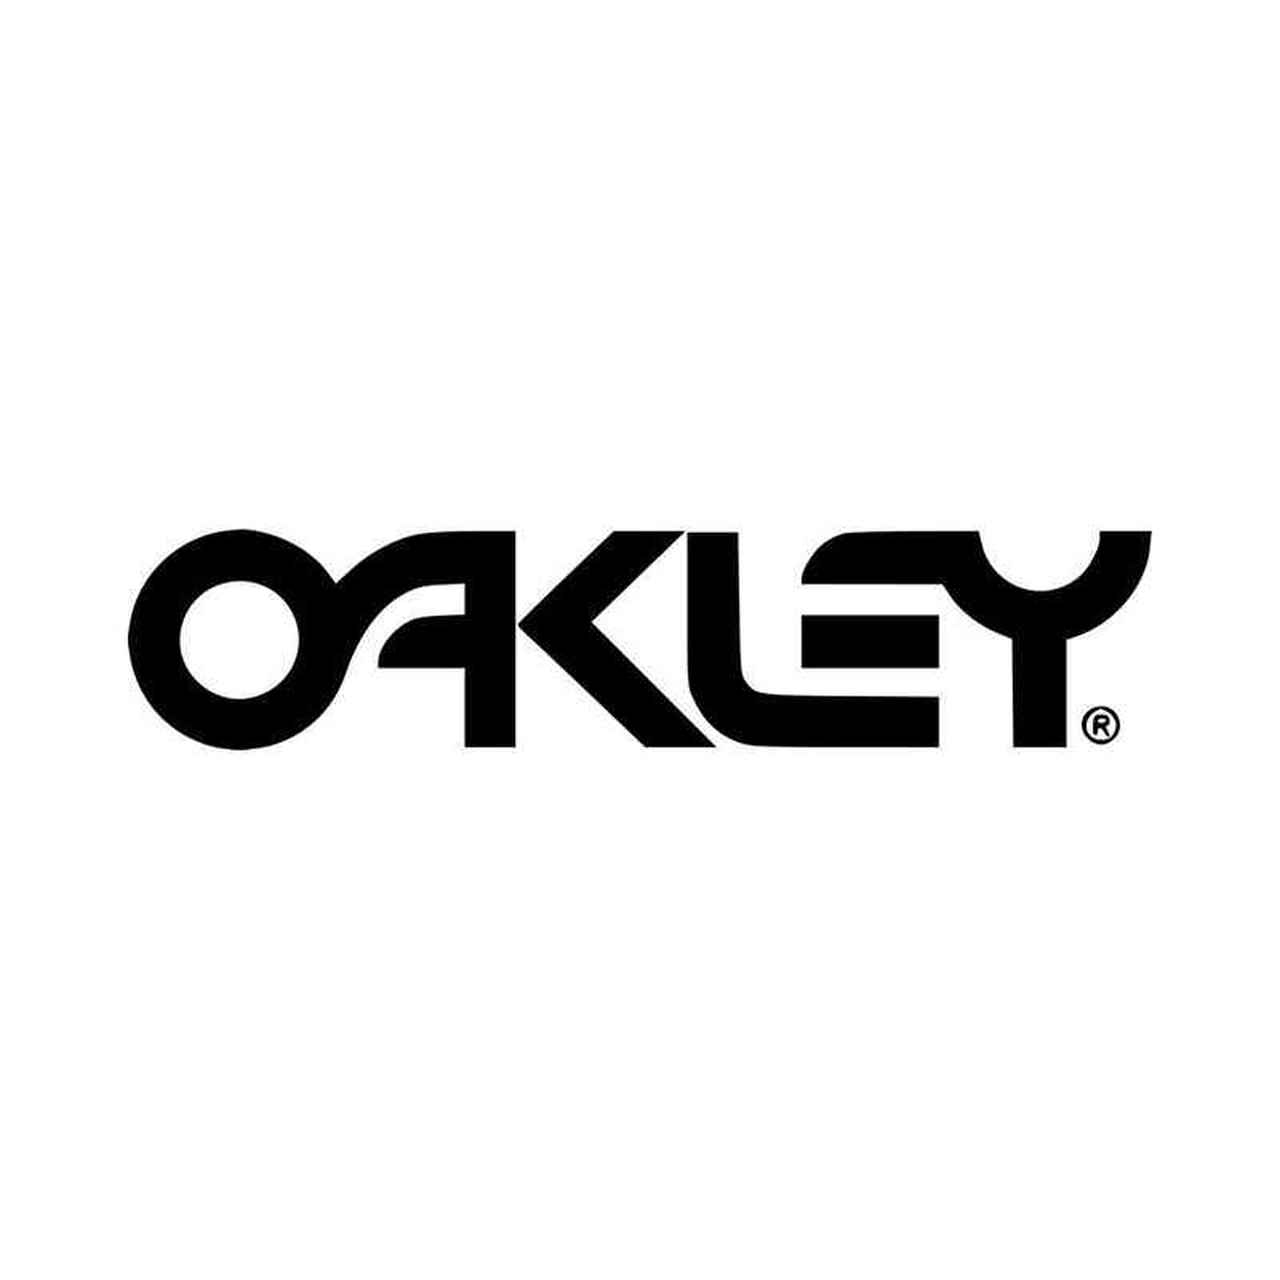 Oakly Logo - Oakley Retro Logo Vinyl Decal Sticker